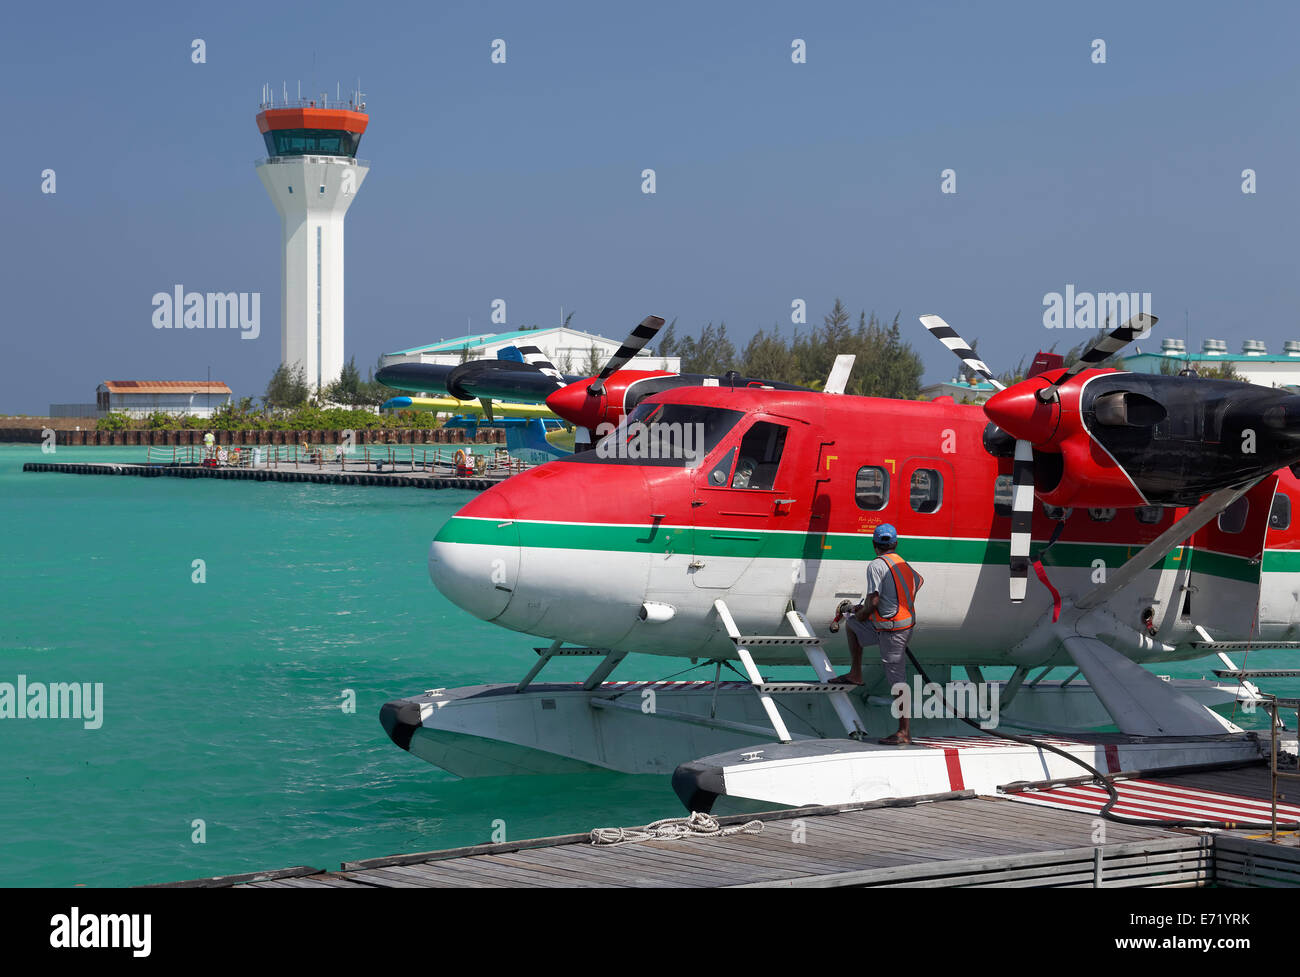 Wasserflugzeug wird betankt, De Havilland Canada DHC-6 Twin Otter, Turm, Malé International Airport, Hulhulé, Malediven Stockfoto